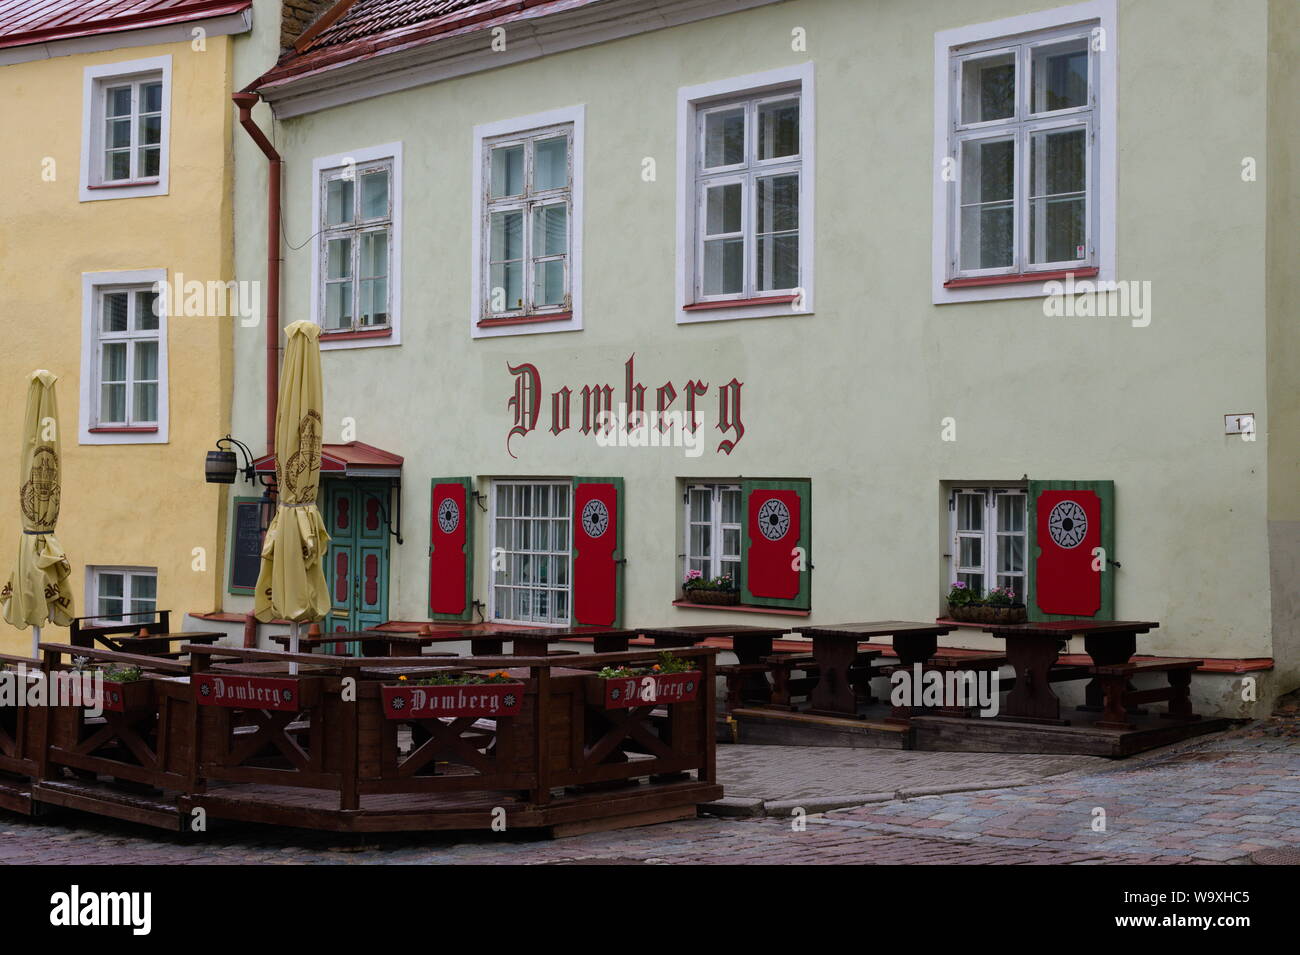 Donberg outdoor cafe in Tallin, Estonia Stock Photo